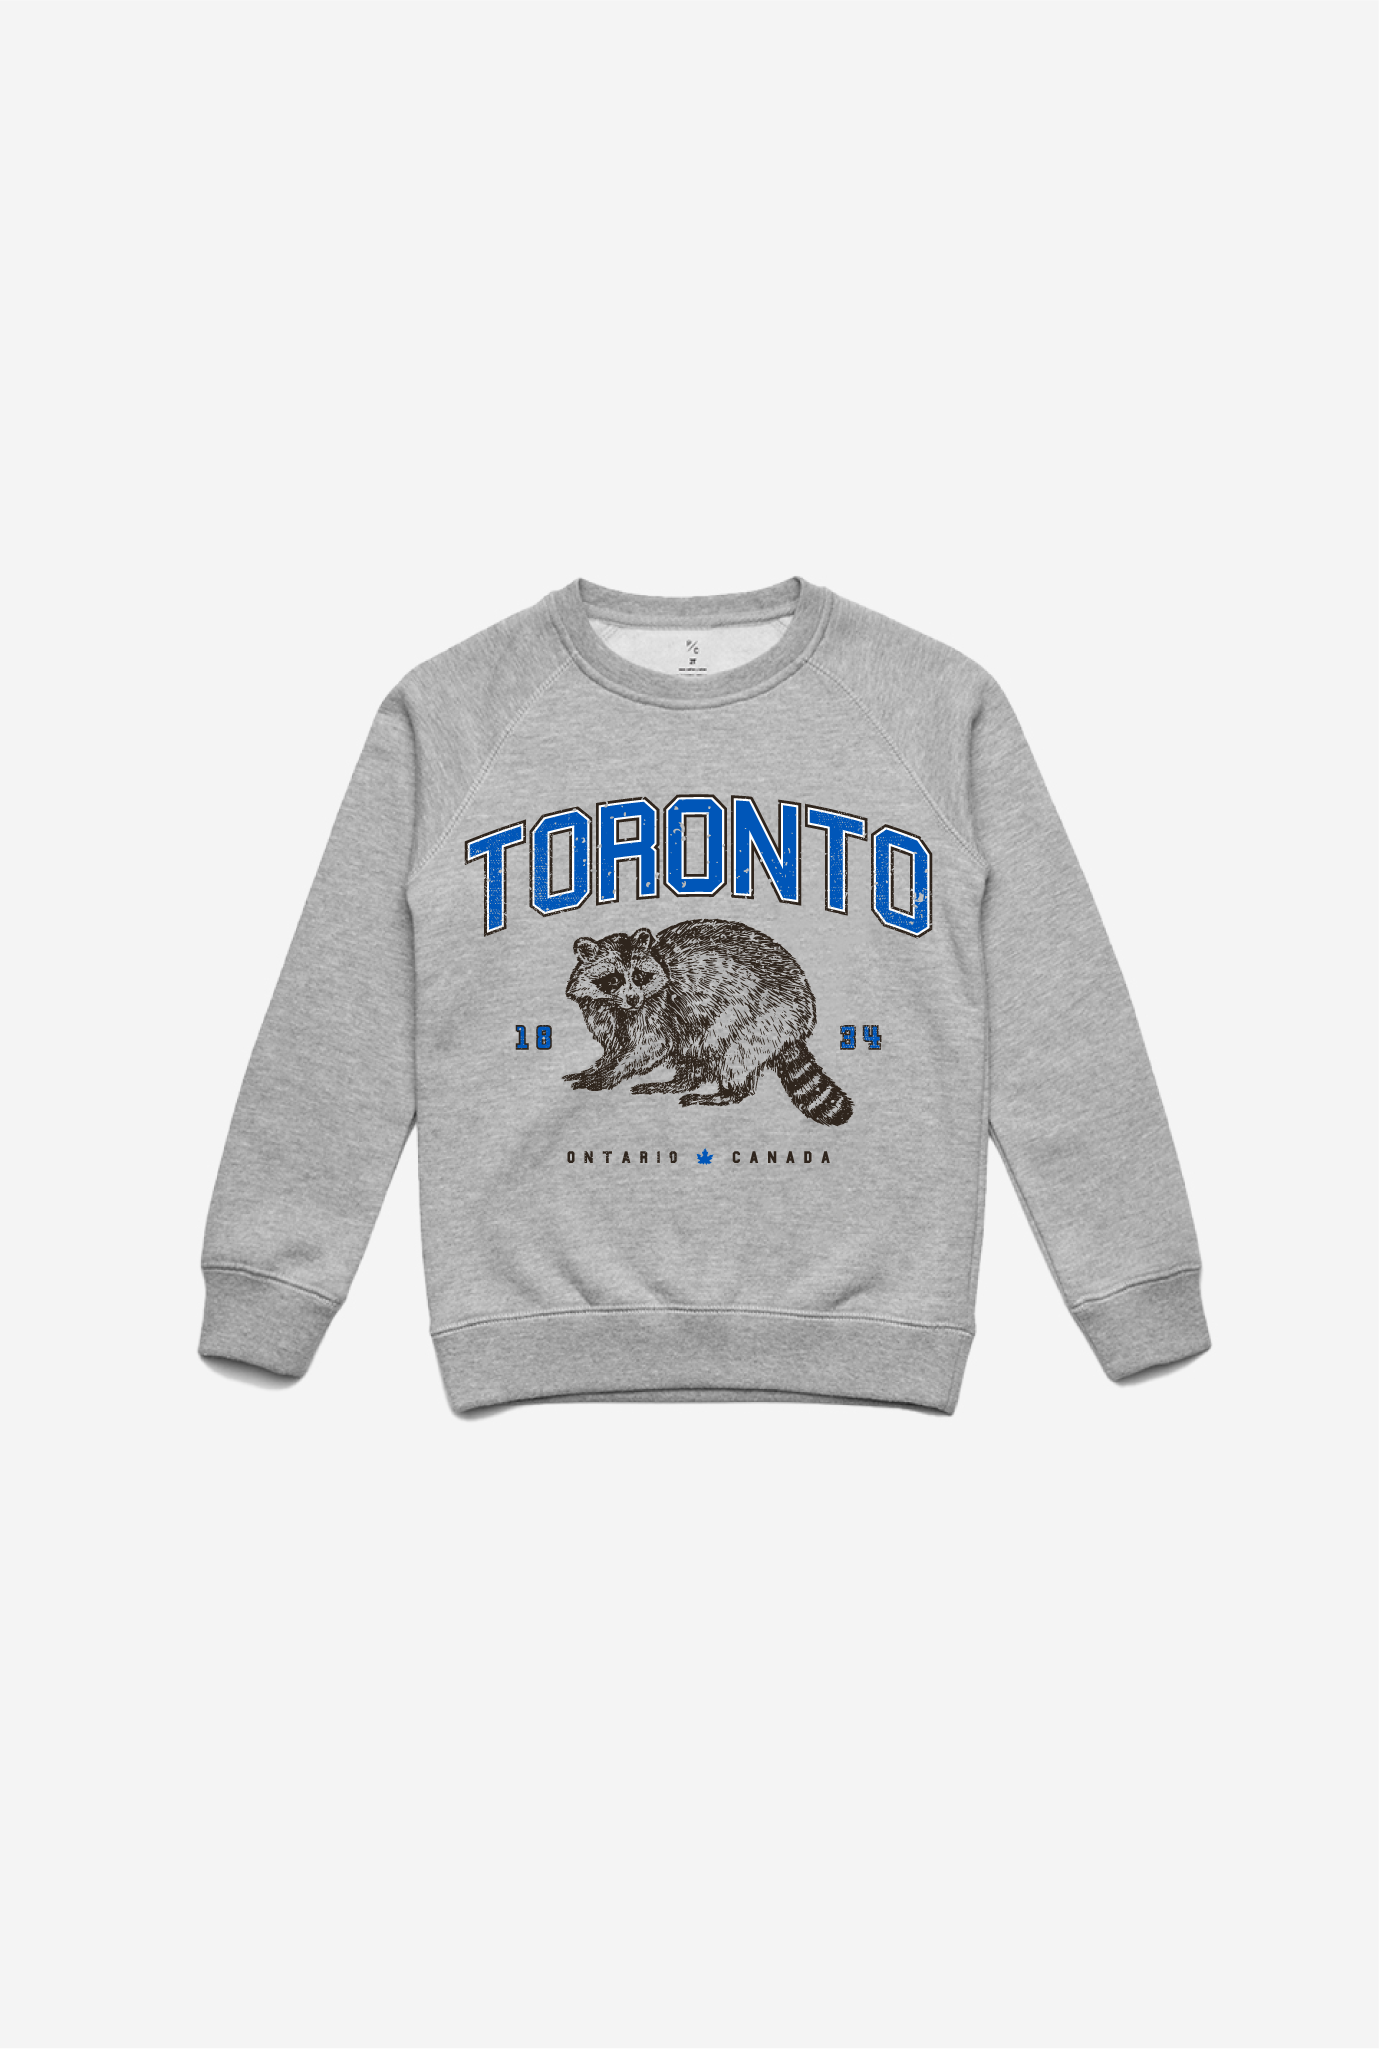 Toronto Vintage Raccoon Kids Crewneck - Grey